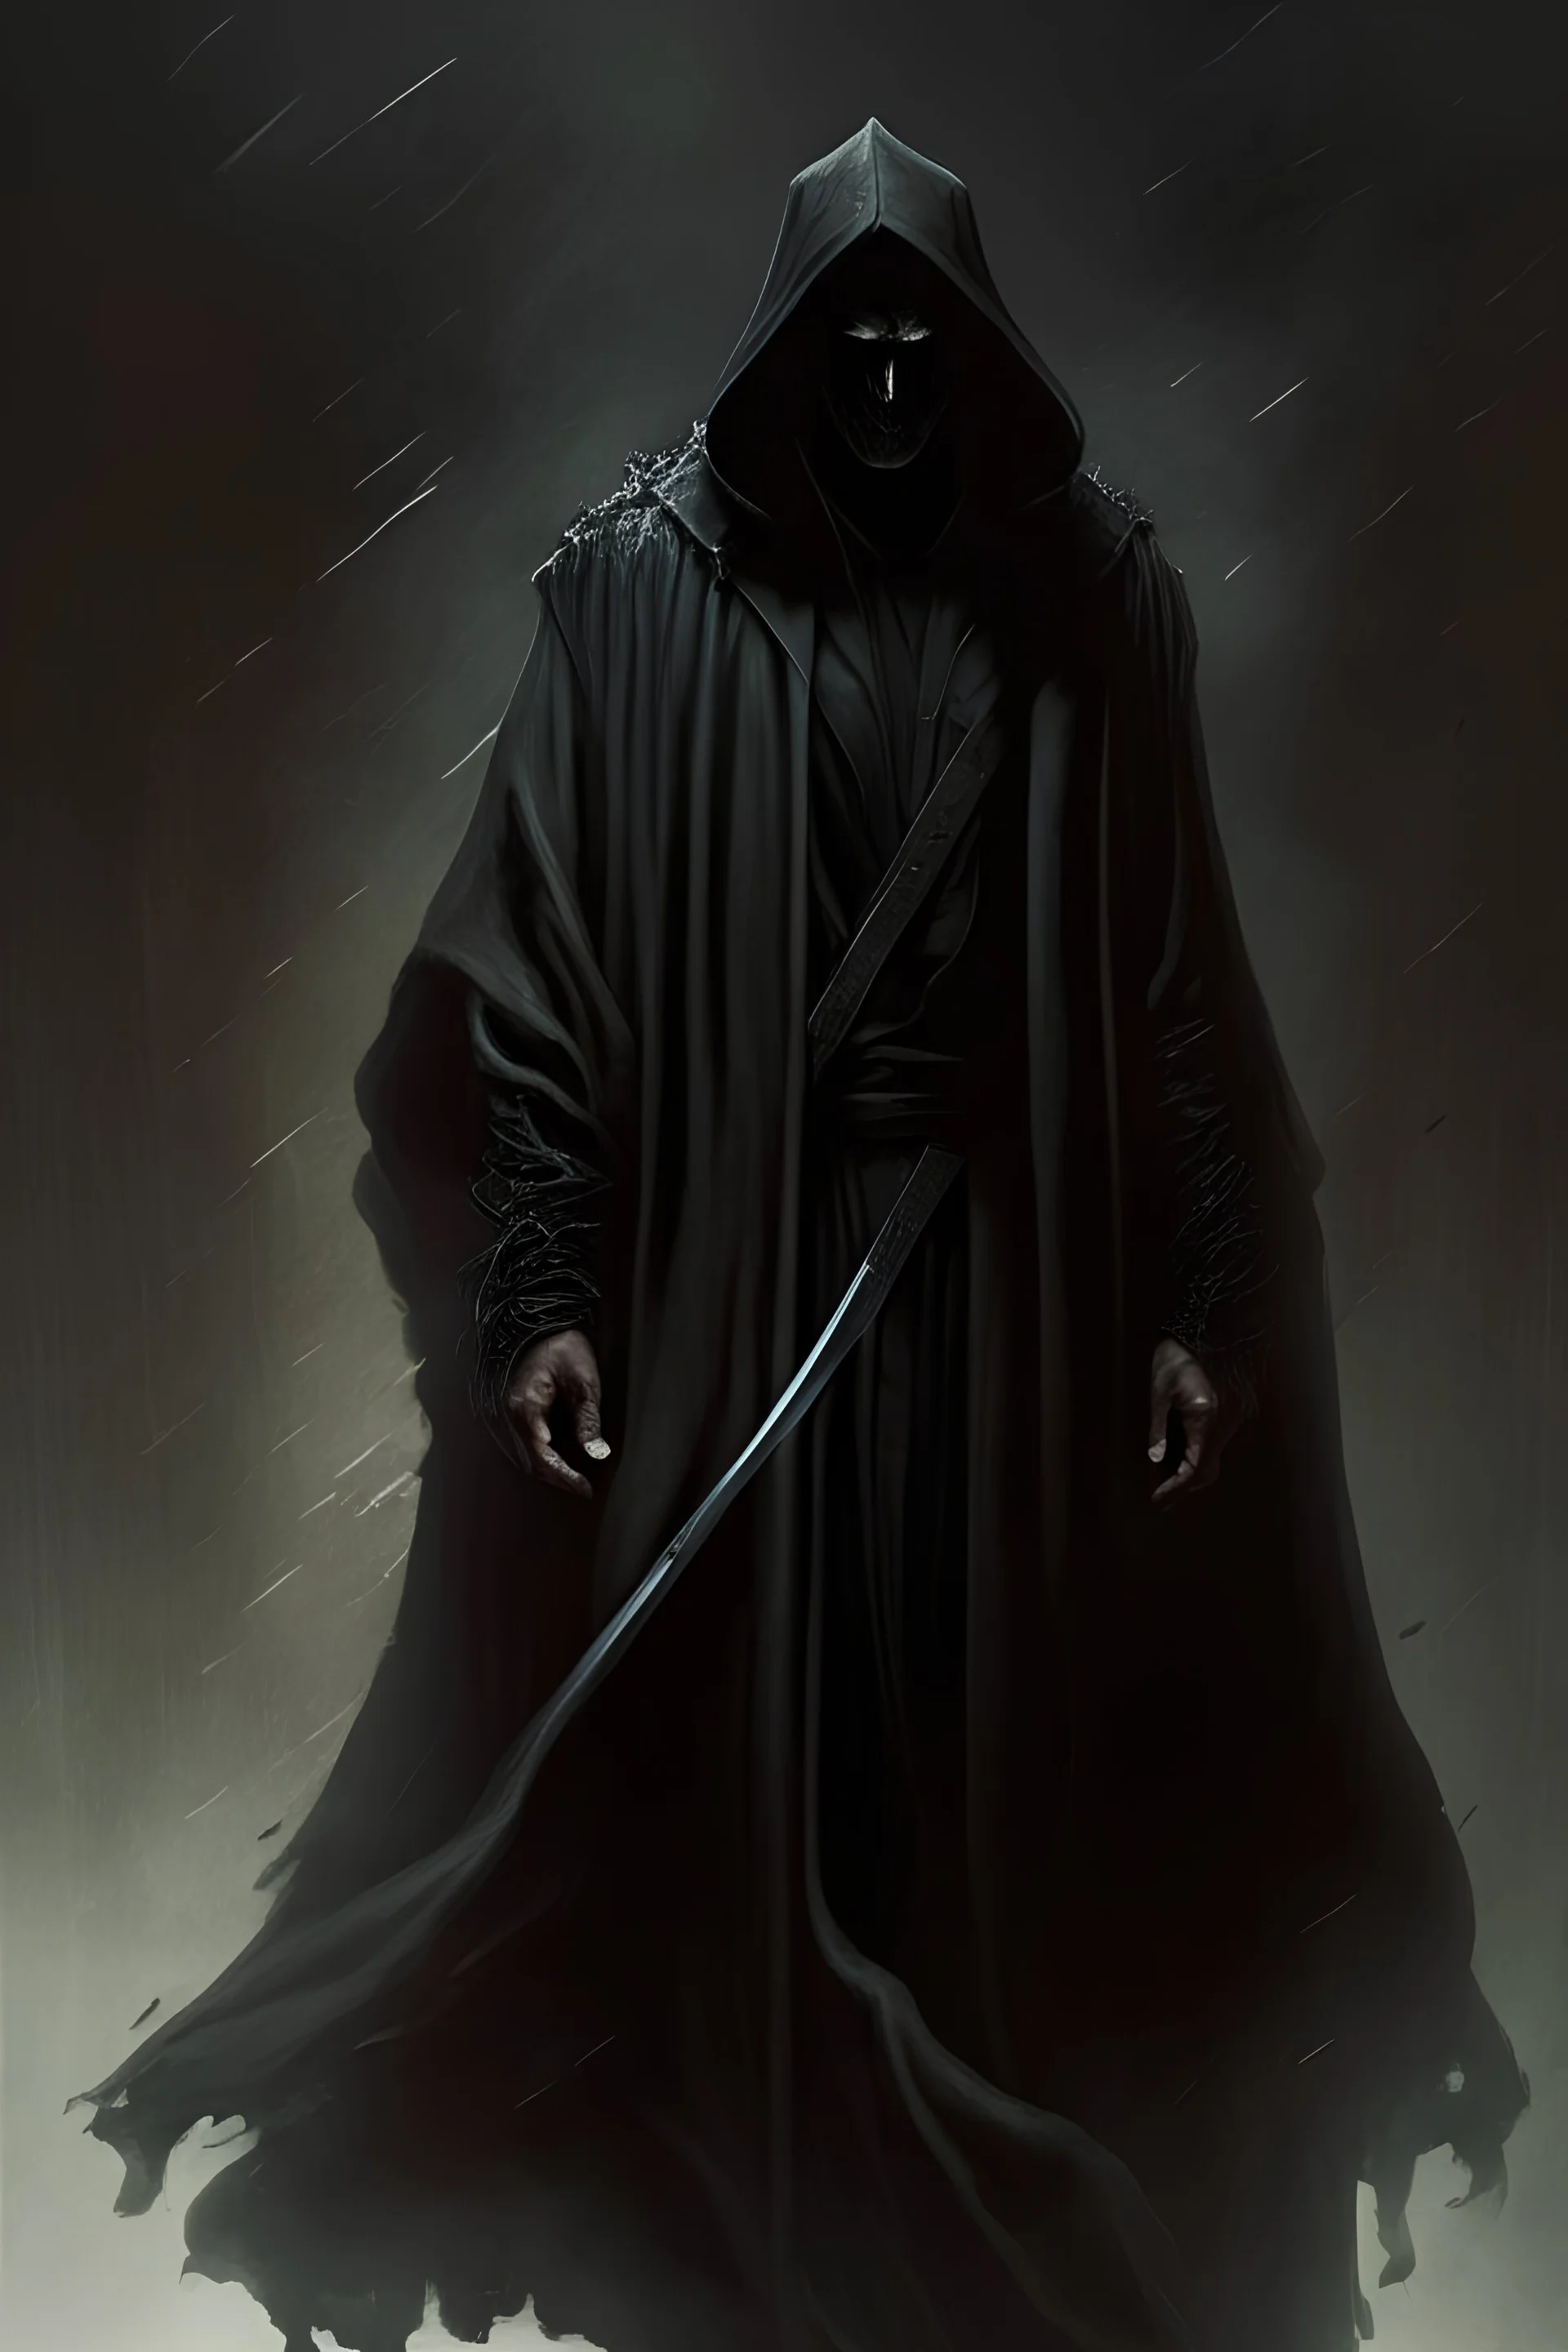 A killer wearing a black robe